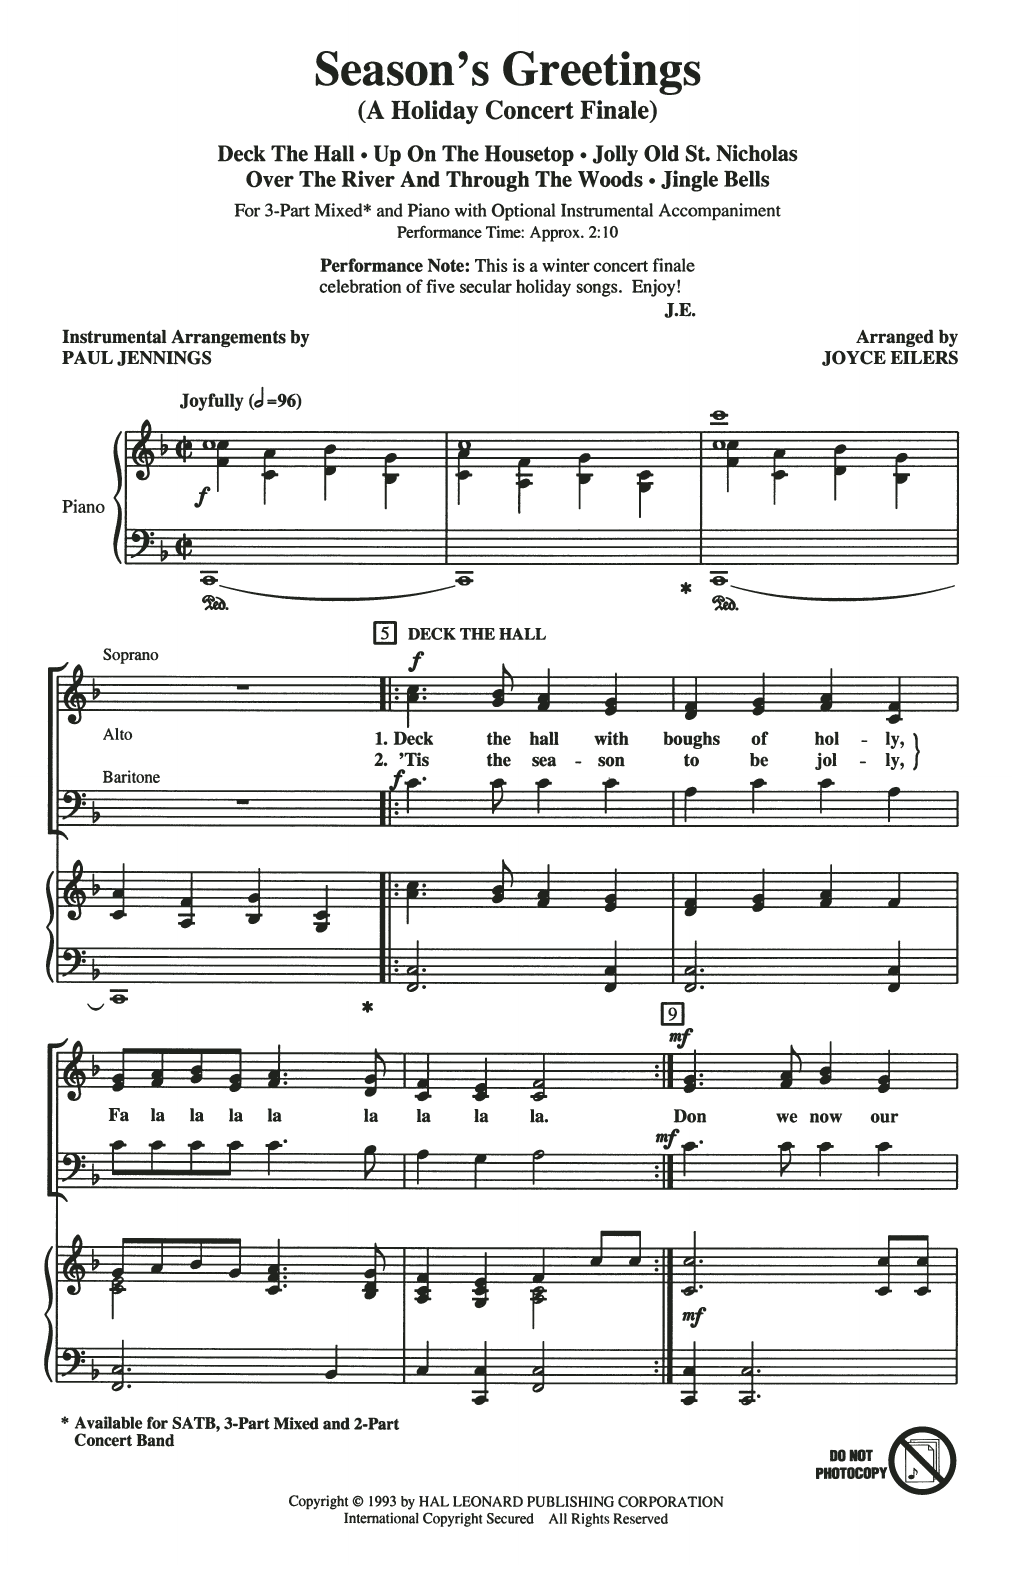 Joyce Eilers Season's Greetings (Medley) Sheet Music Notes & Chords for 2-Part Choir - Download or Print PDF